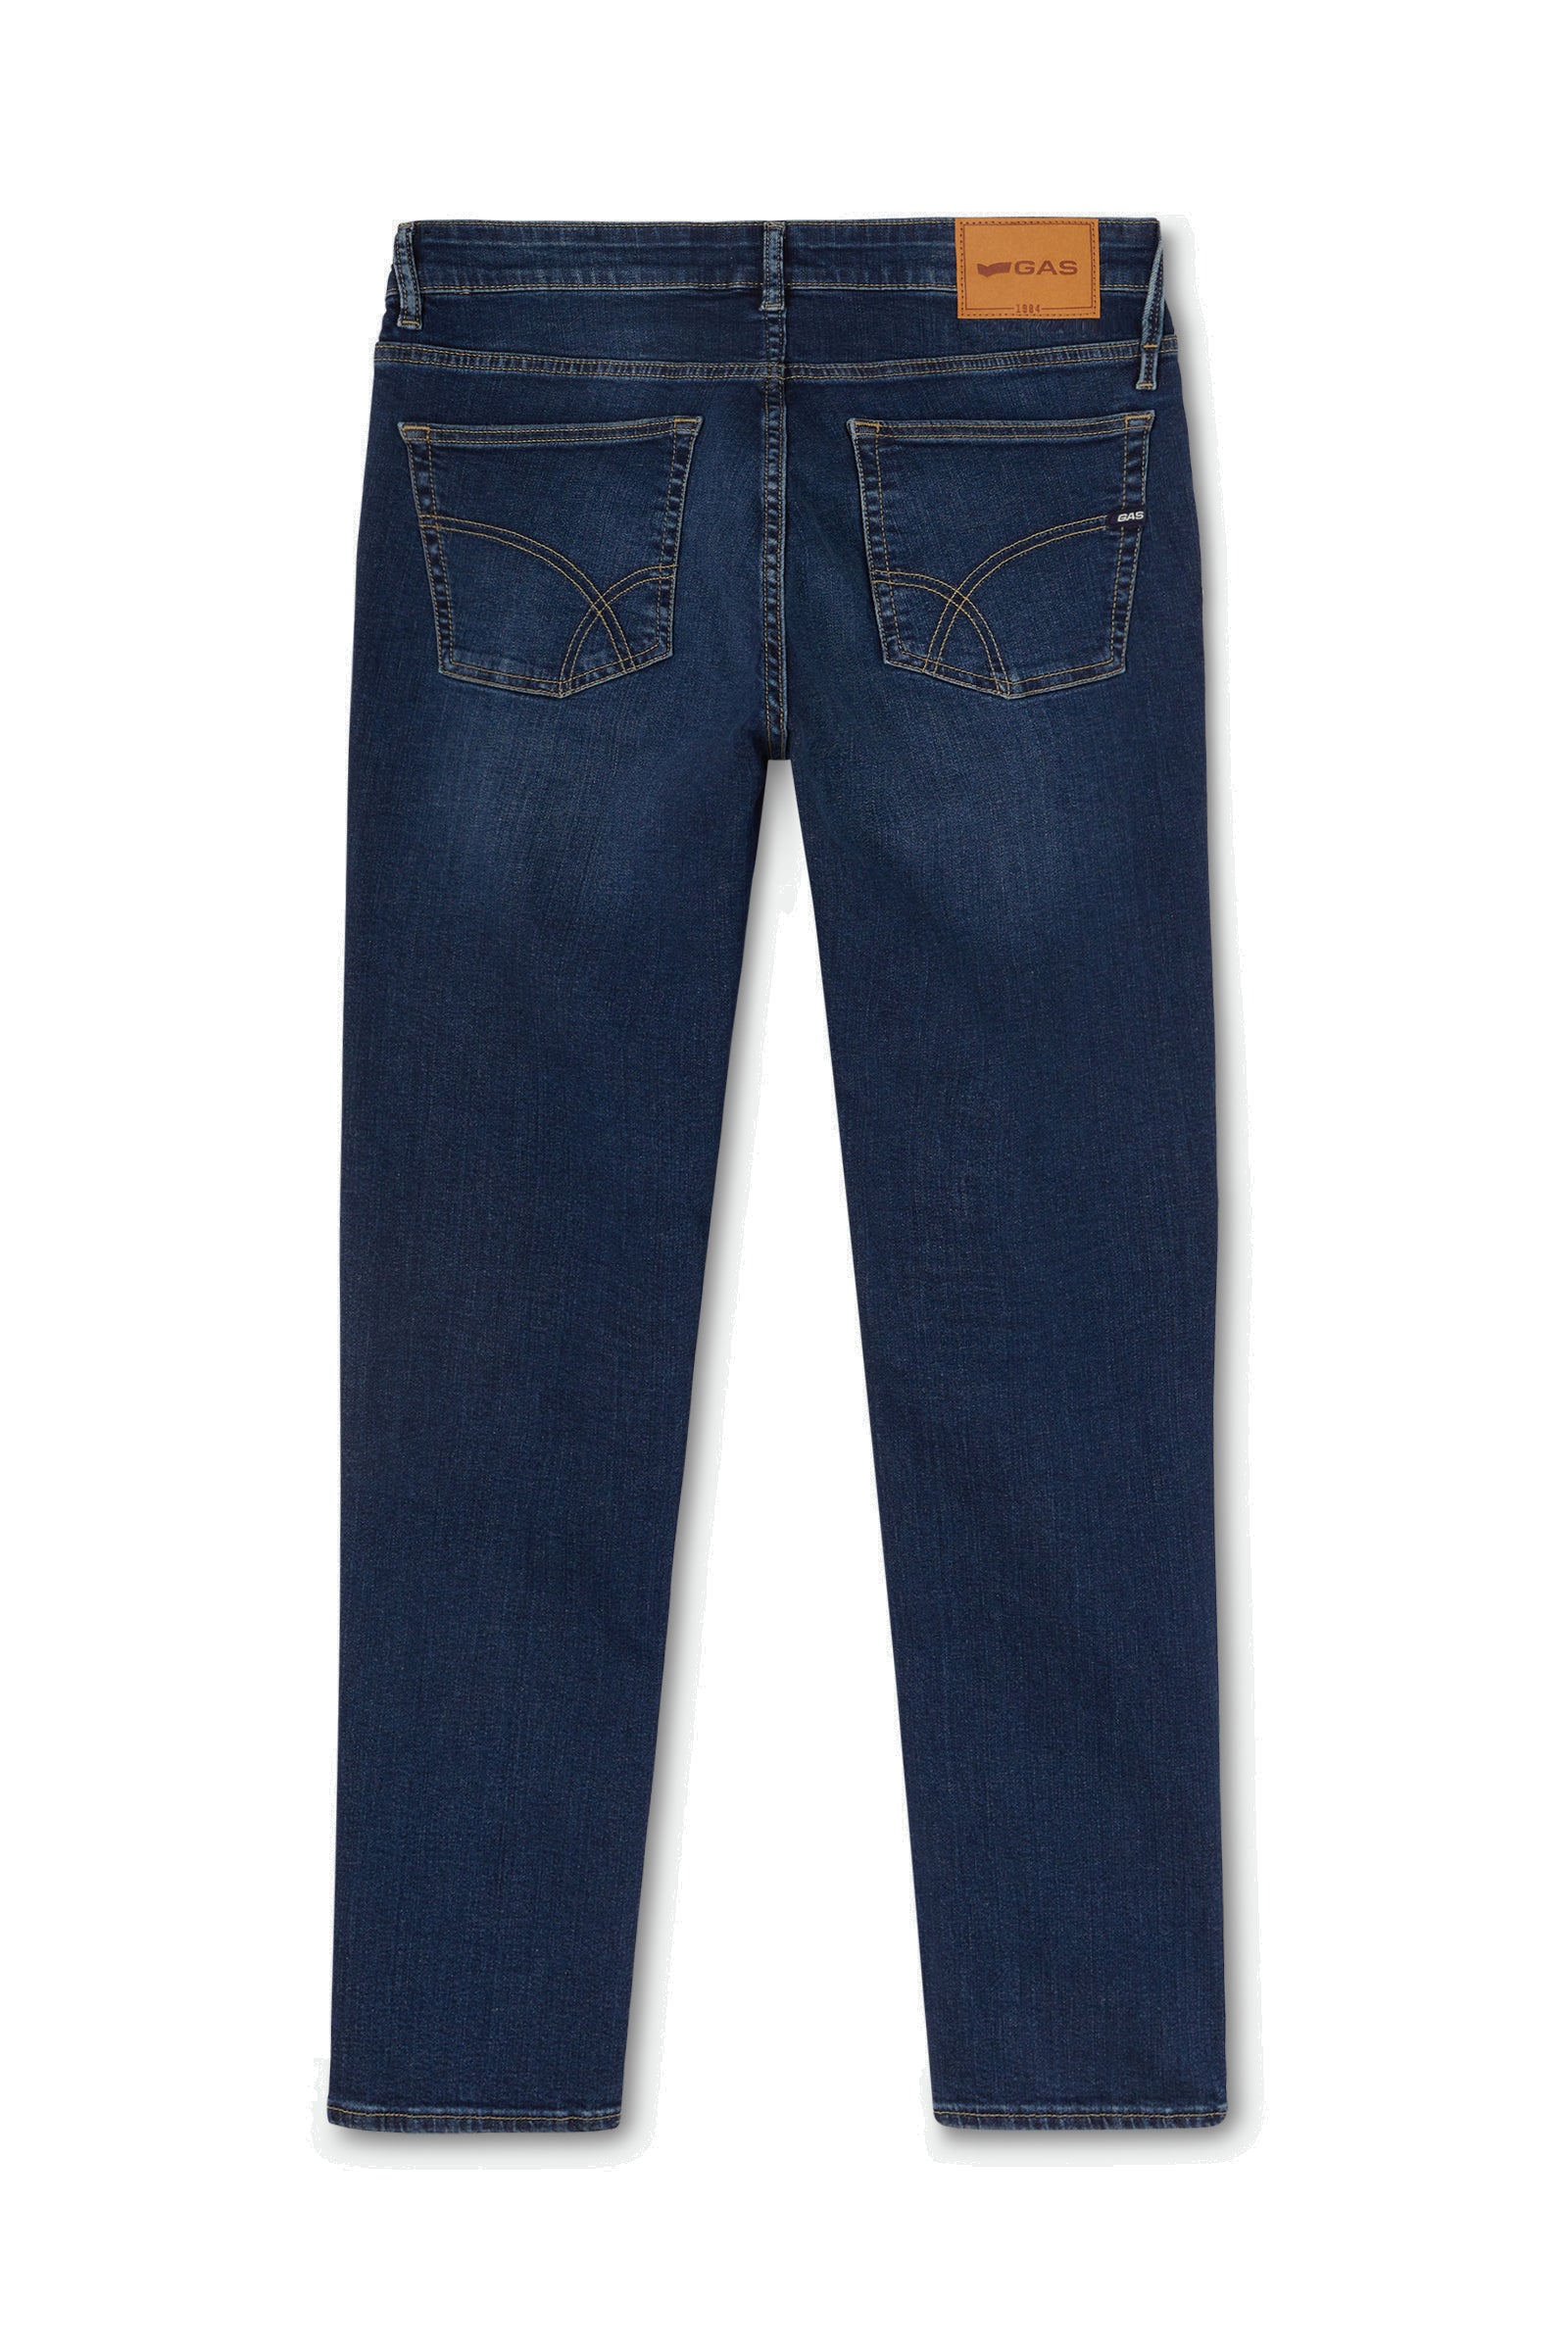 Sax Zip Rev 5 Pocket in Rags Mid Dark Jeans GAS   